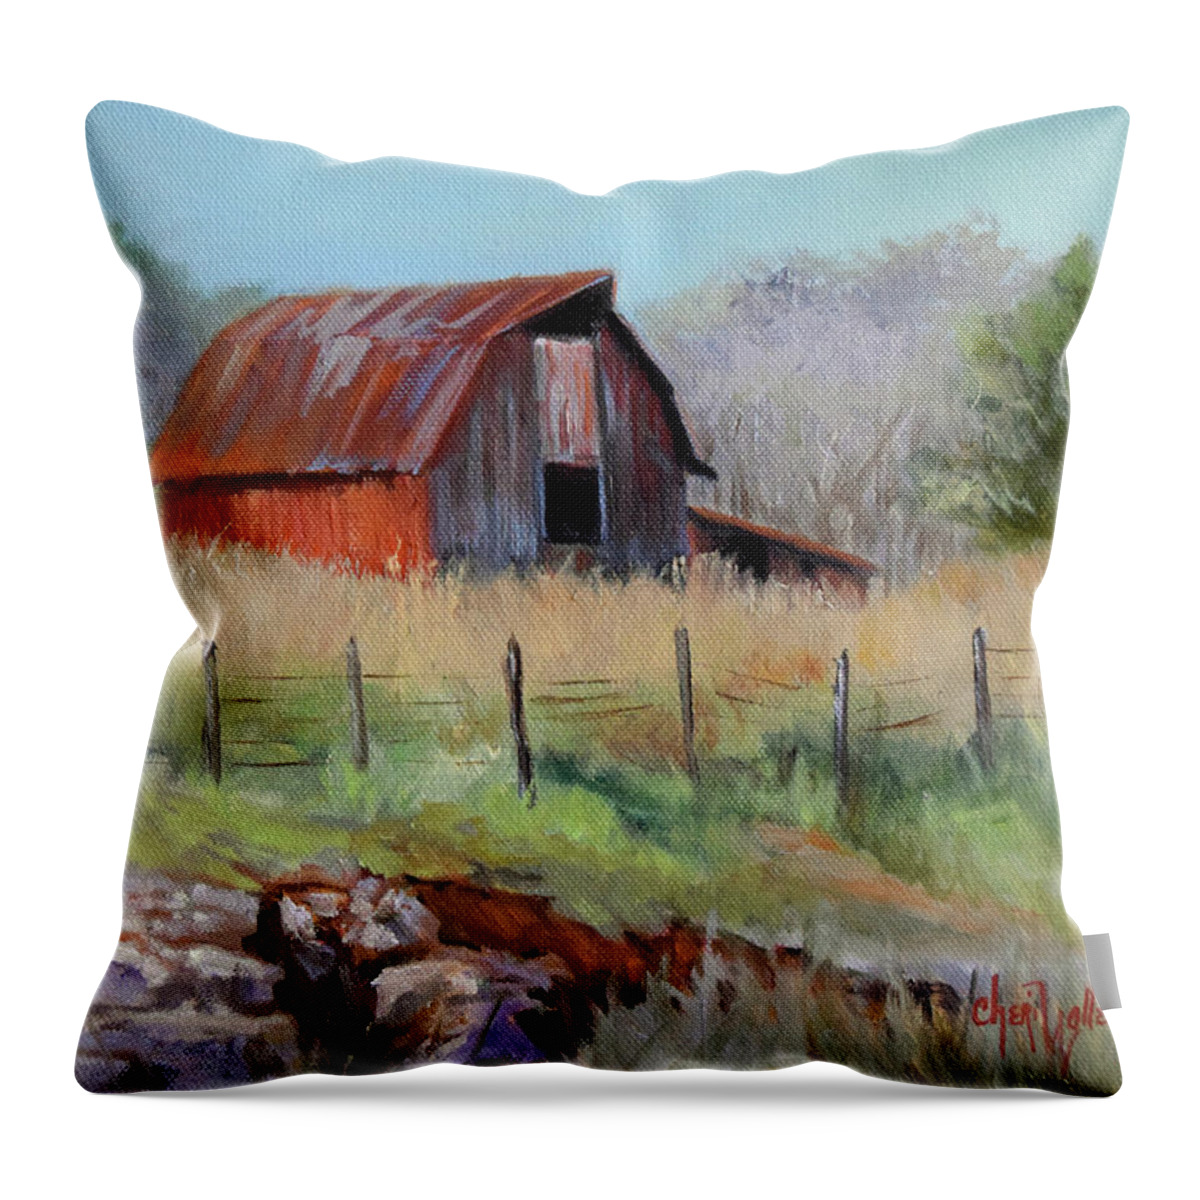 Barn Throw Pillow featuring the painting Barn At Bella Vista Arkansas by Cheri Wollenberg